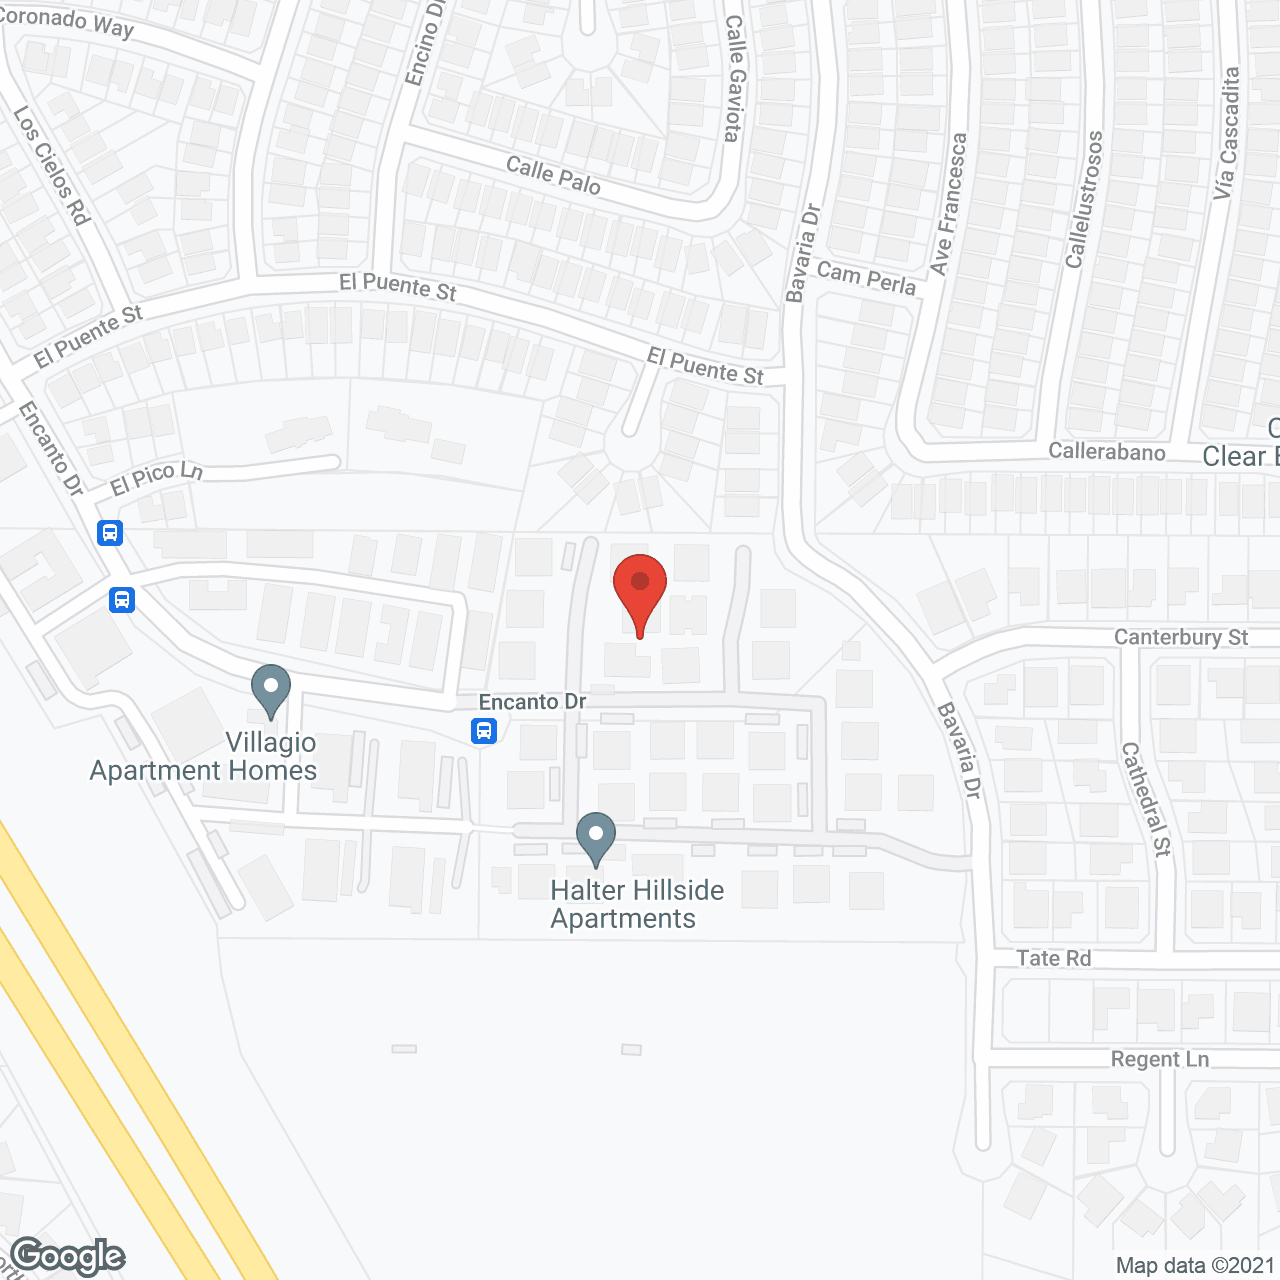 Hillside Apartment in google map